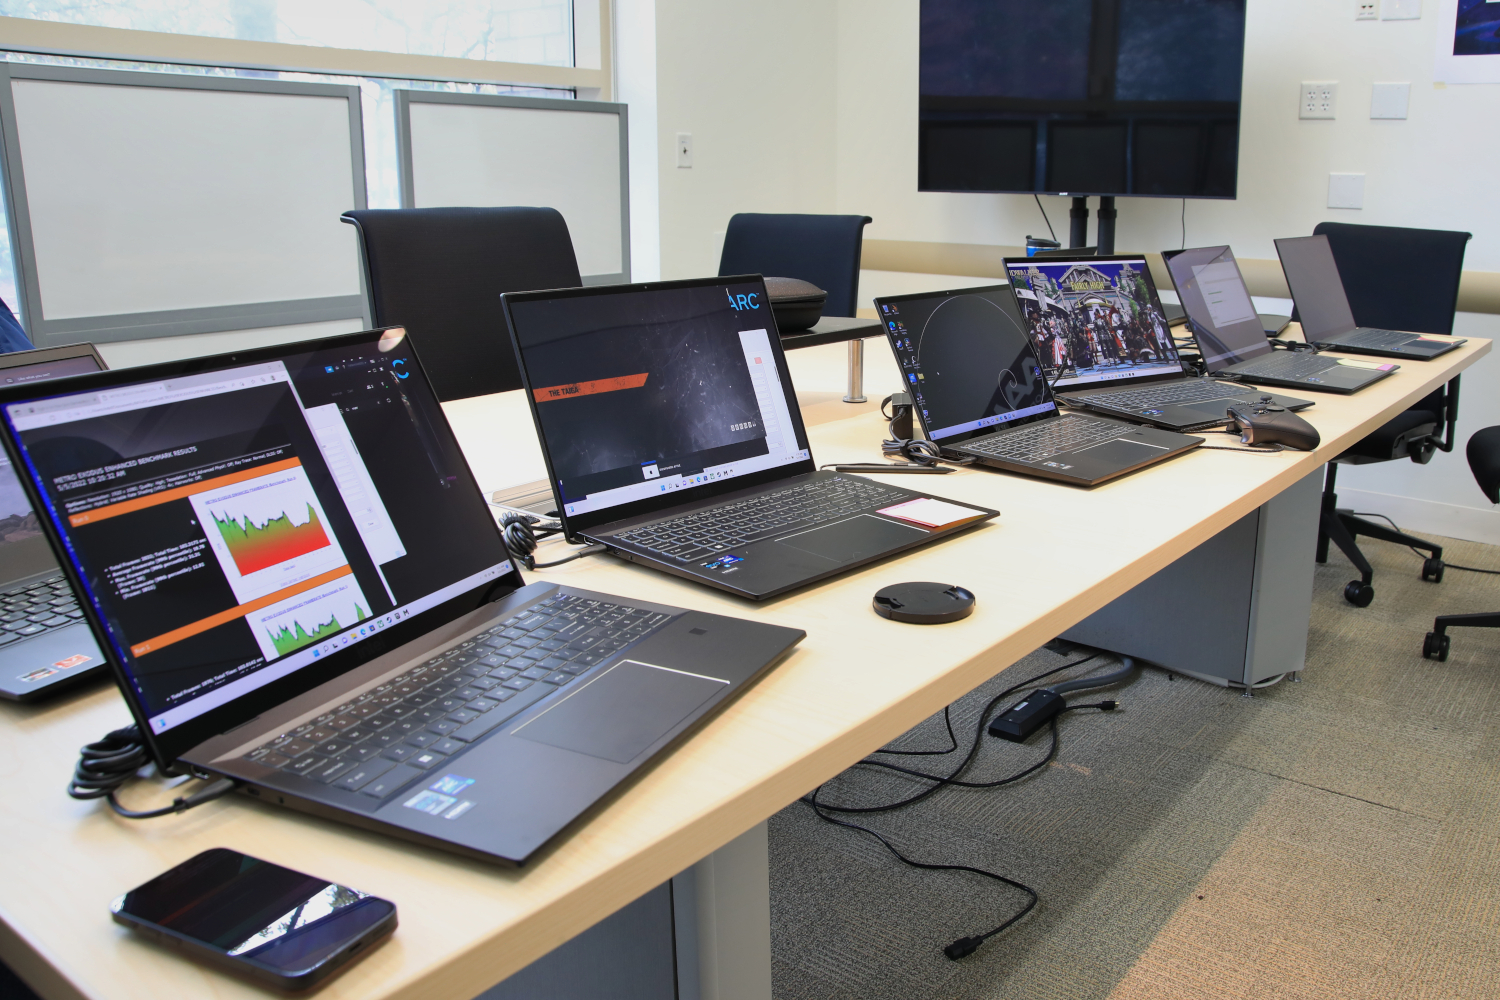 Arc laptops at Intel's Jones Farm Campus